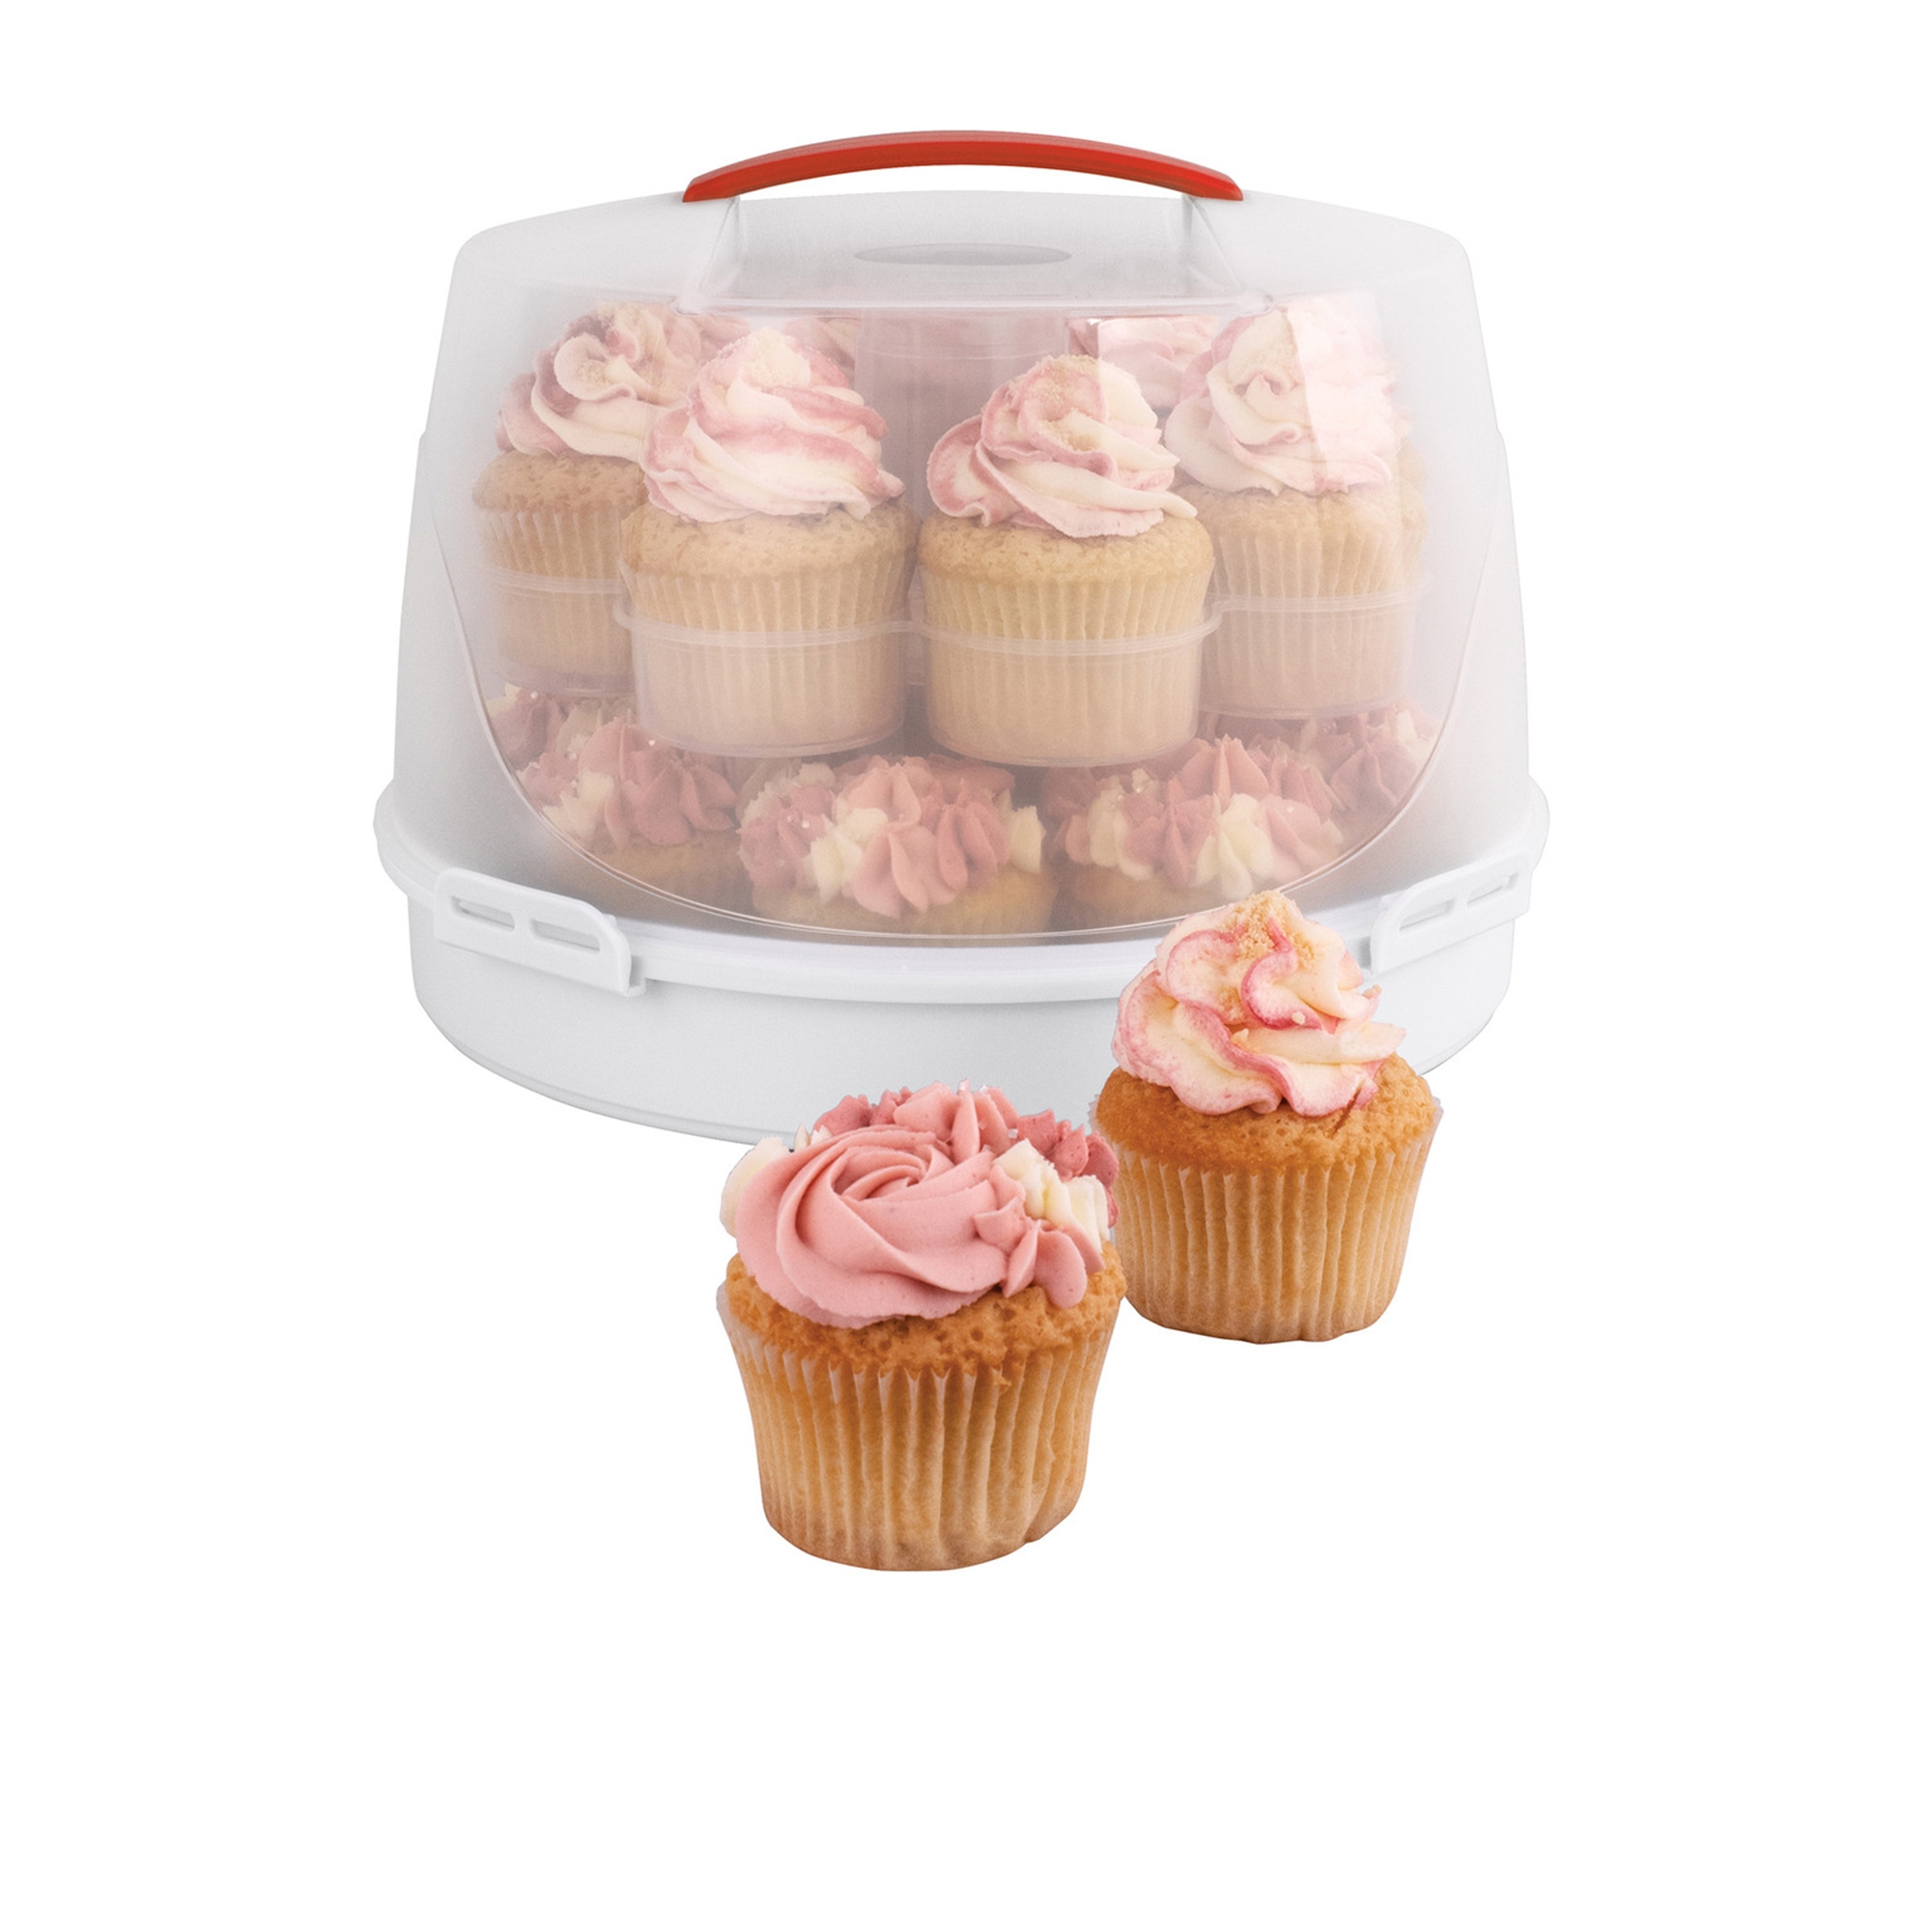 Avanti Round 2 Tier Cupcake and Cake Carrier Image 2